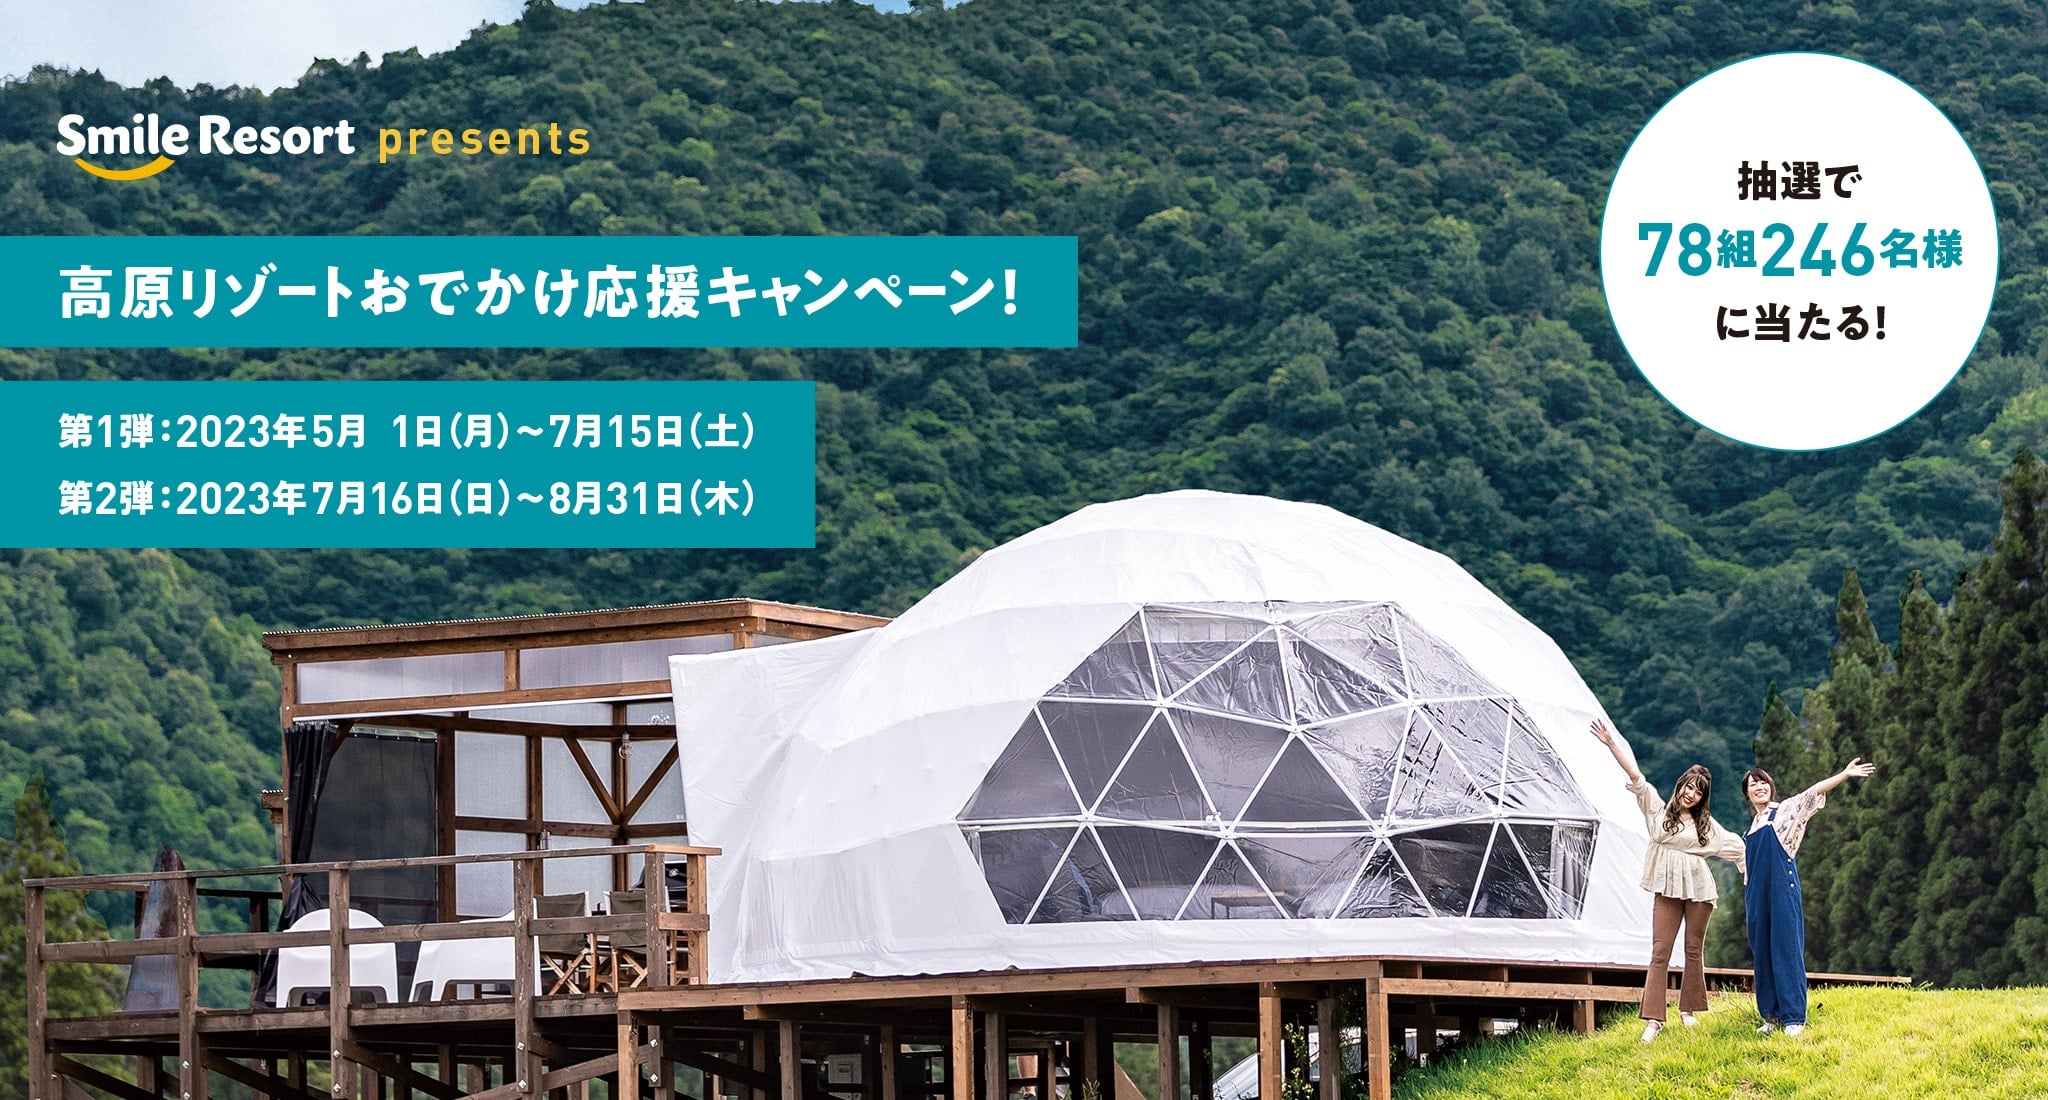 Smile Resort presents 高原リゾートおでかけ応援キャンペーン